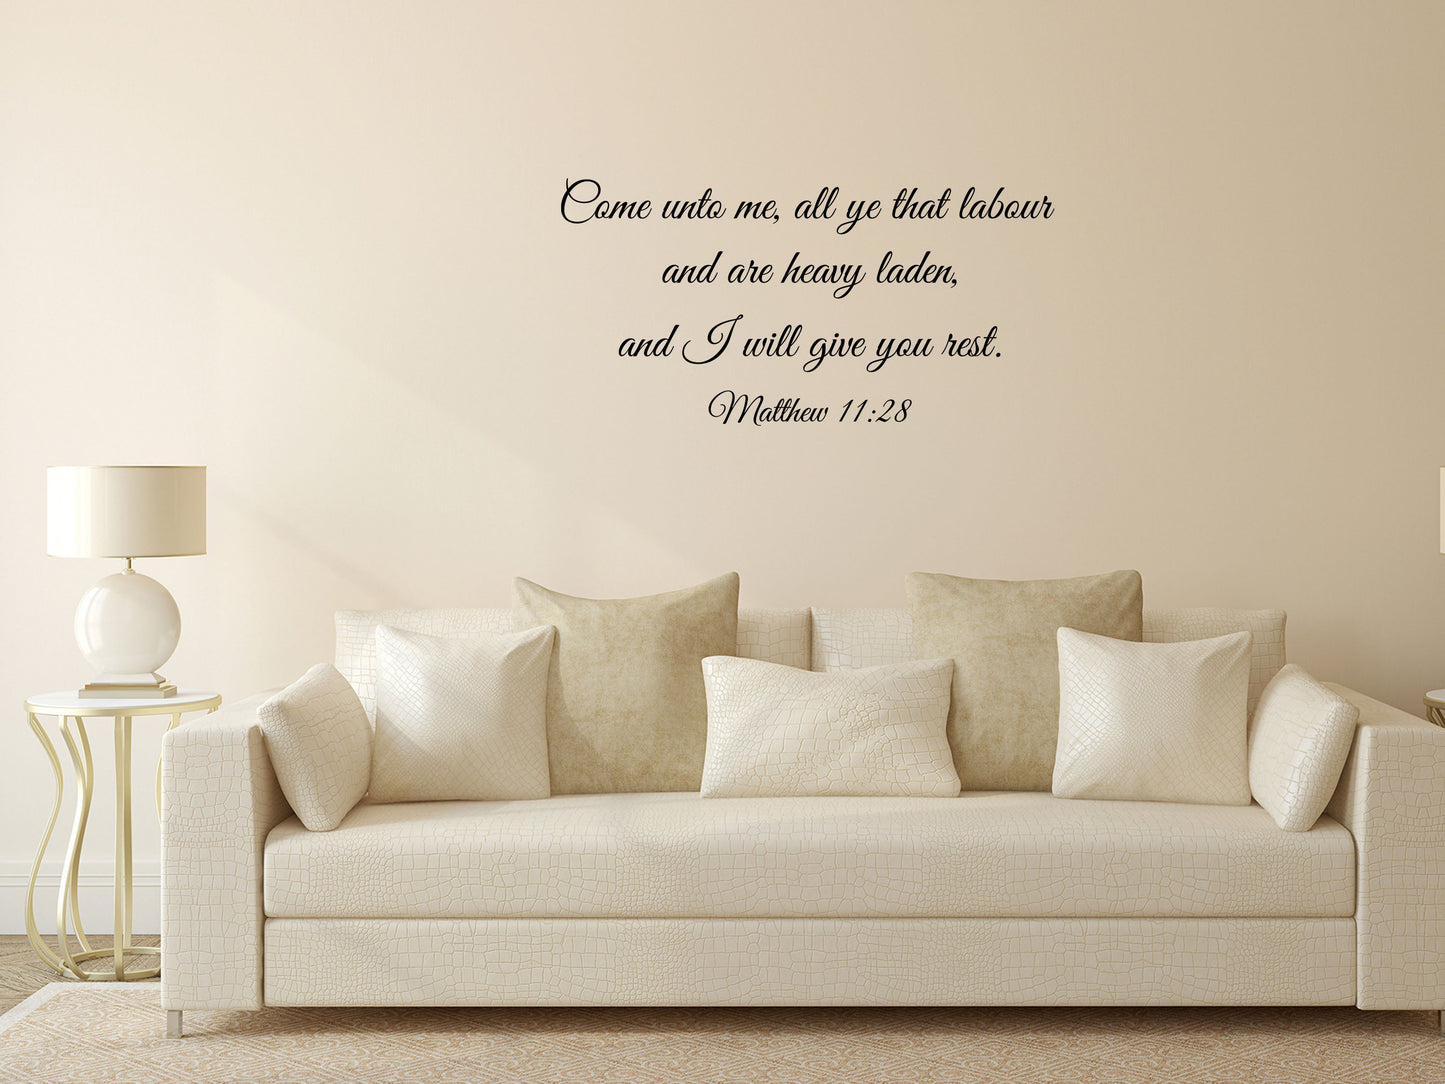 Matthew 11:28 - Bedroom Scripture Decal Vinyl Wall Decal Inspirational Wall Signs 